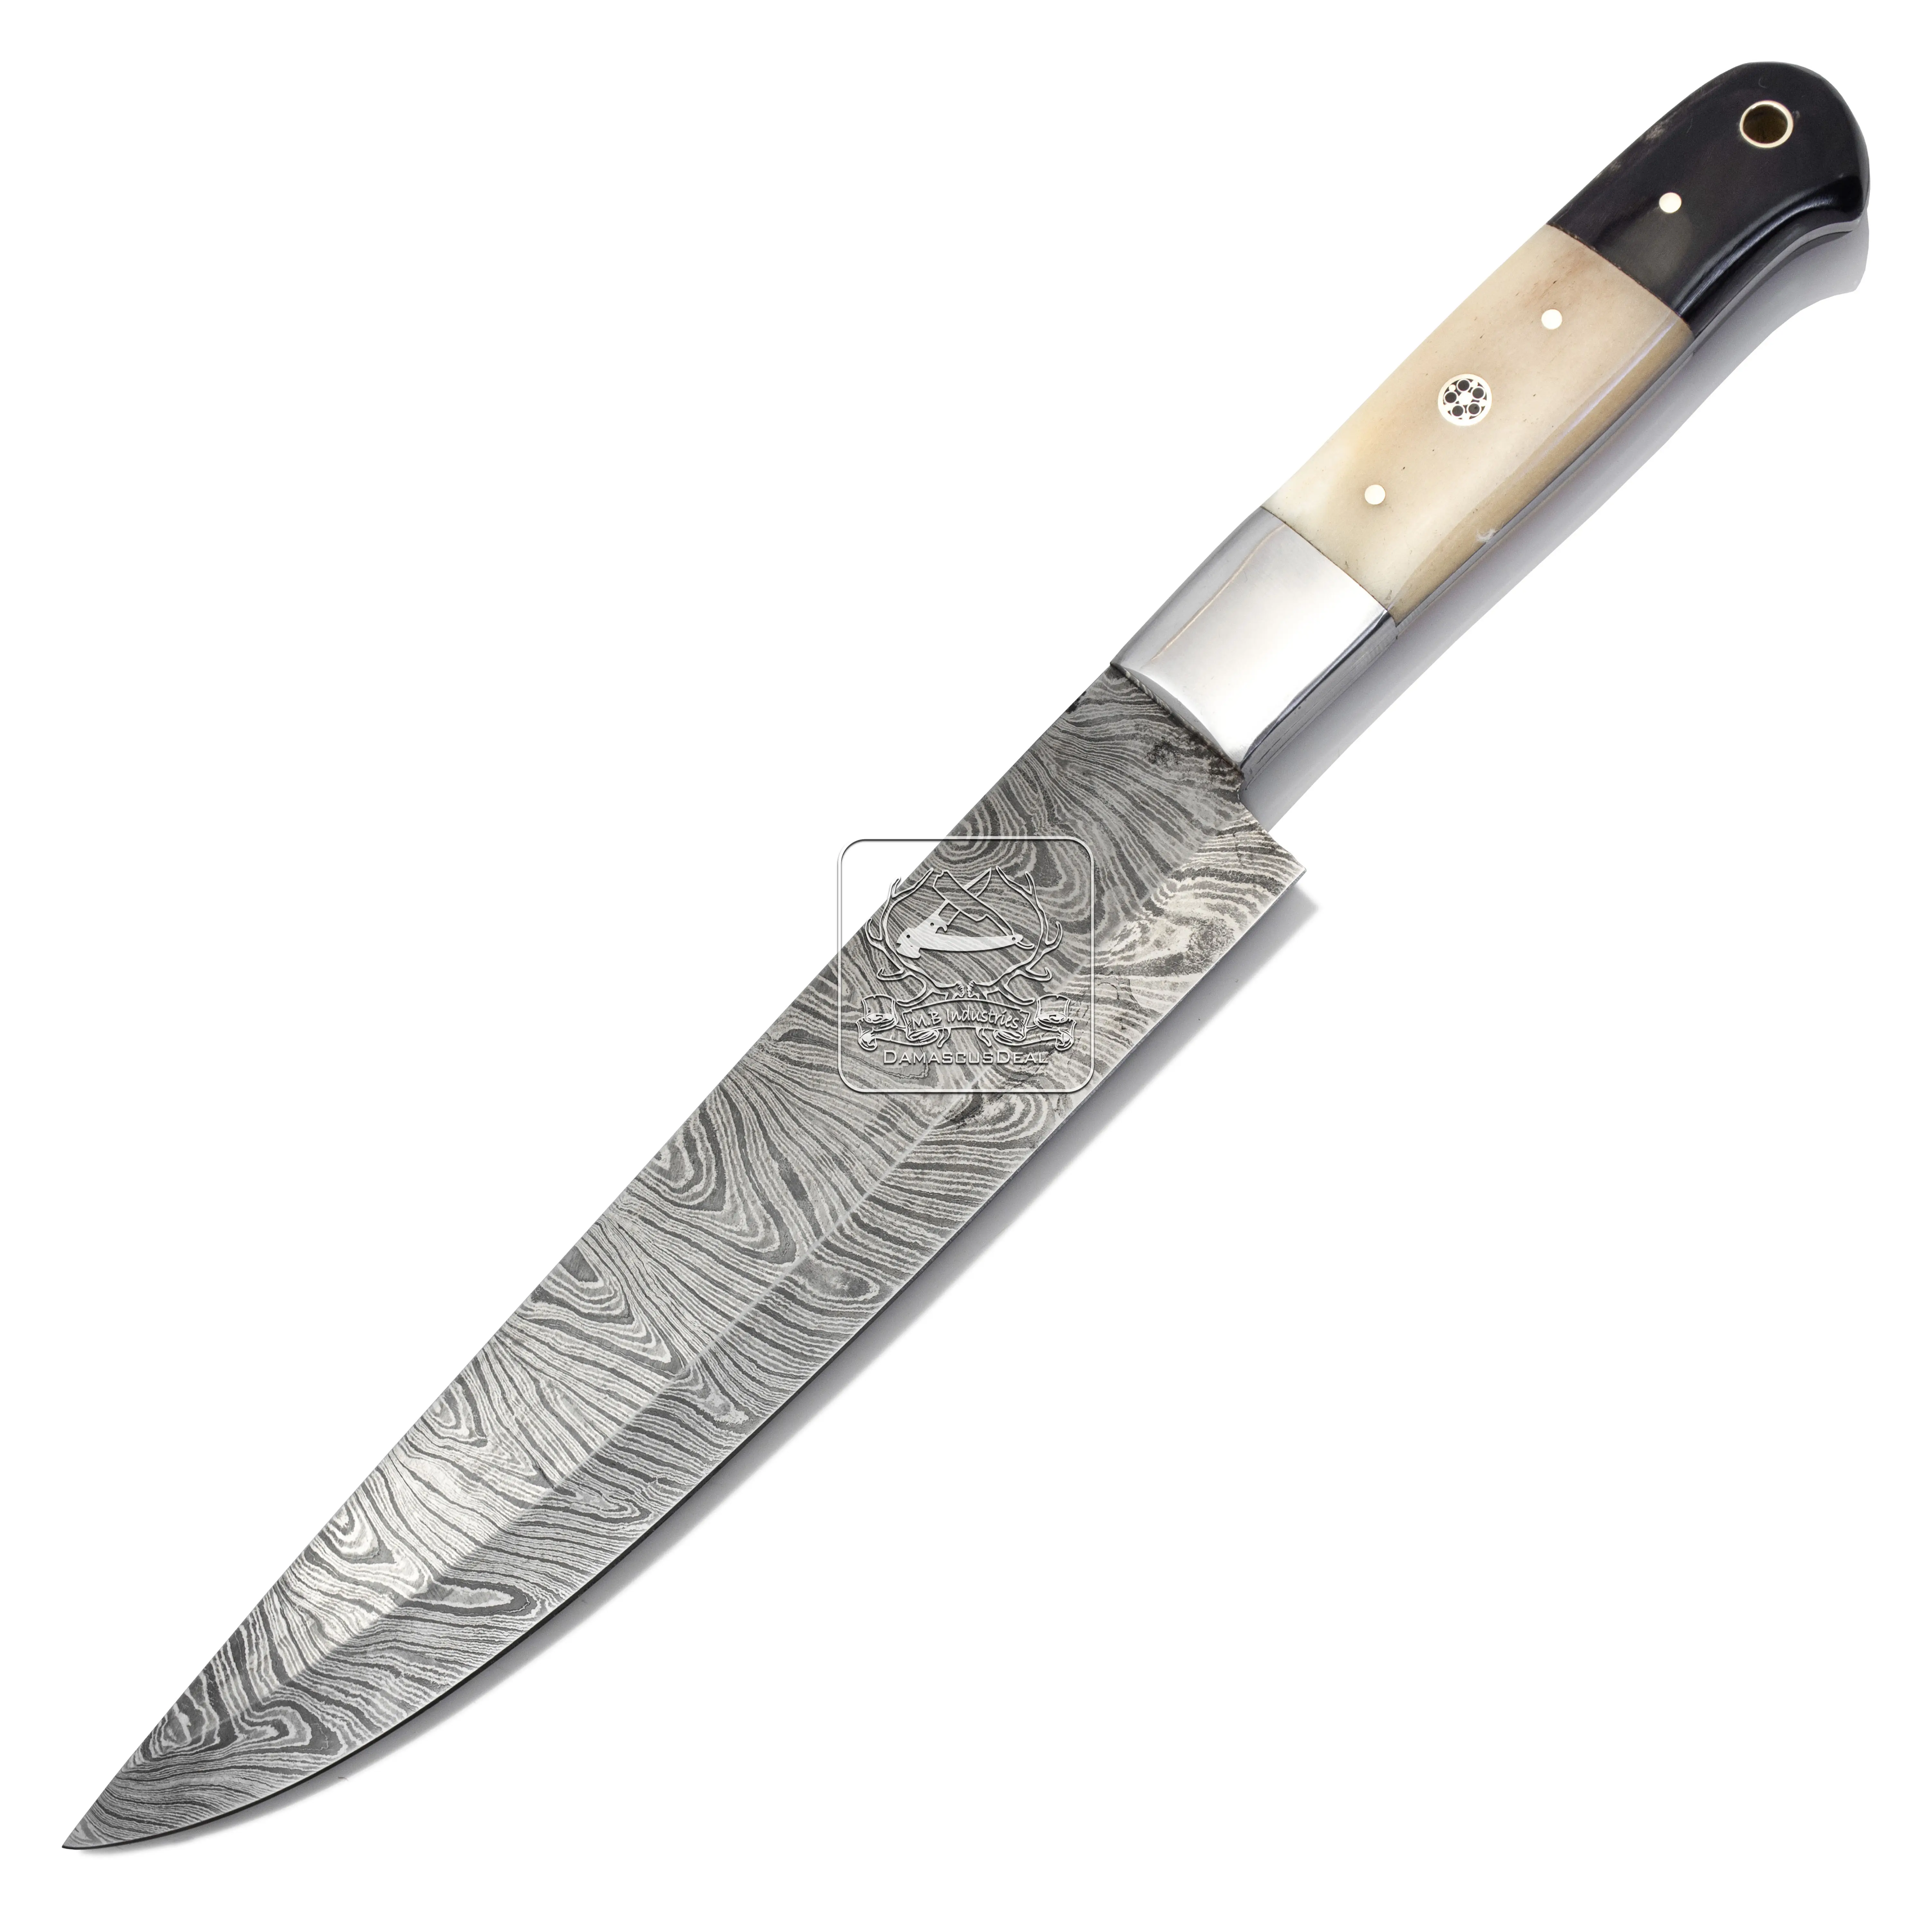 Cuchillo de cocina de acero de Damasco de estilo japonés de Venta caliente, cuchillo de Chef afilado profesional con hueso de camello y búfalo